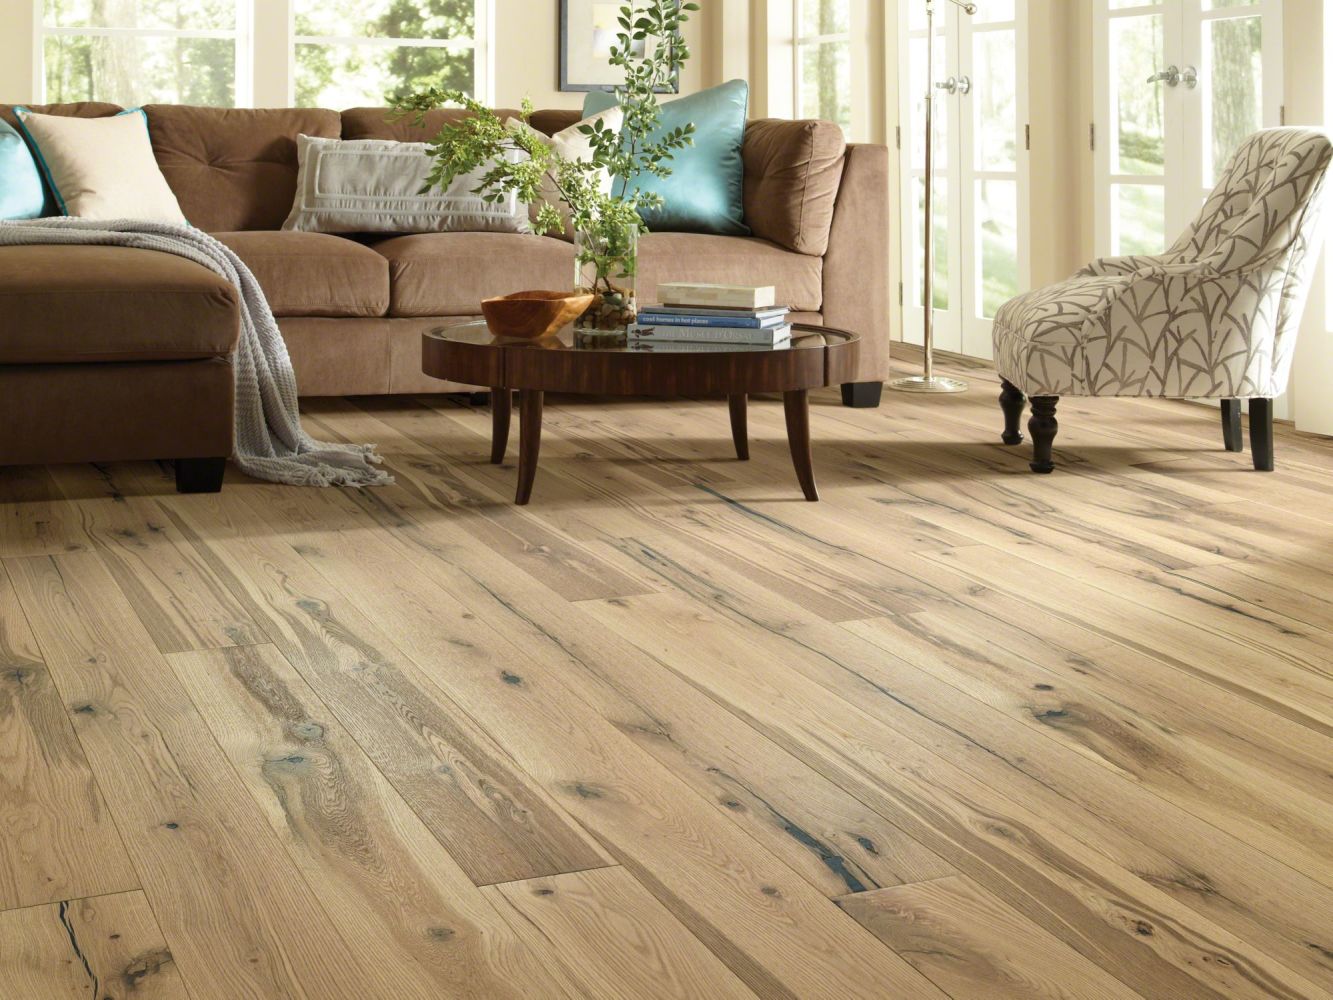 Shaw Floors Repel Hardwood Inspirations White Oak Timber 01027_213SA